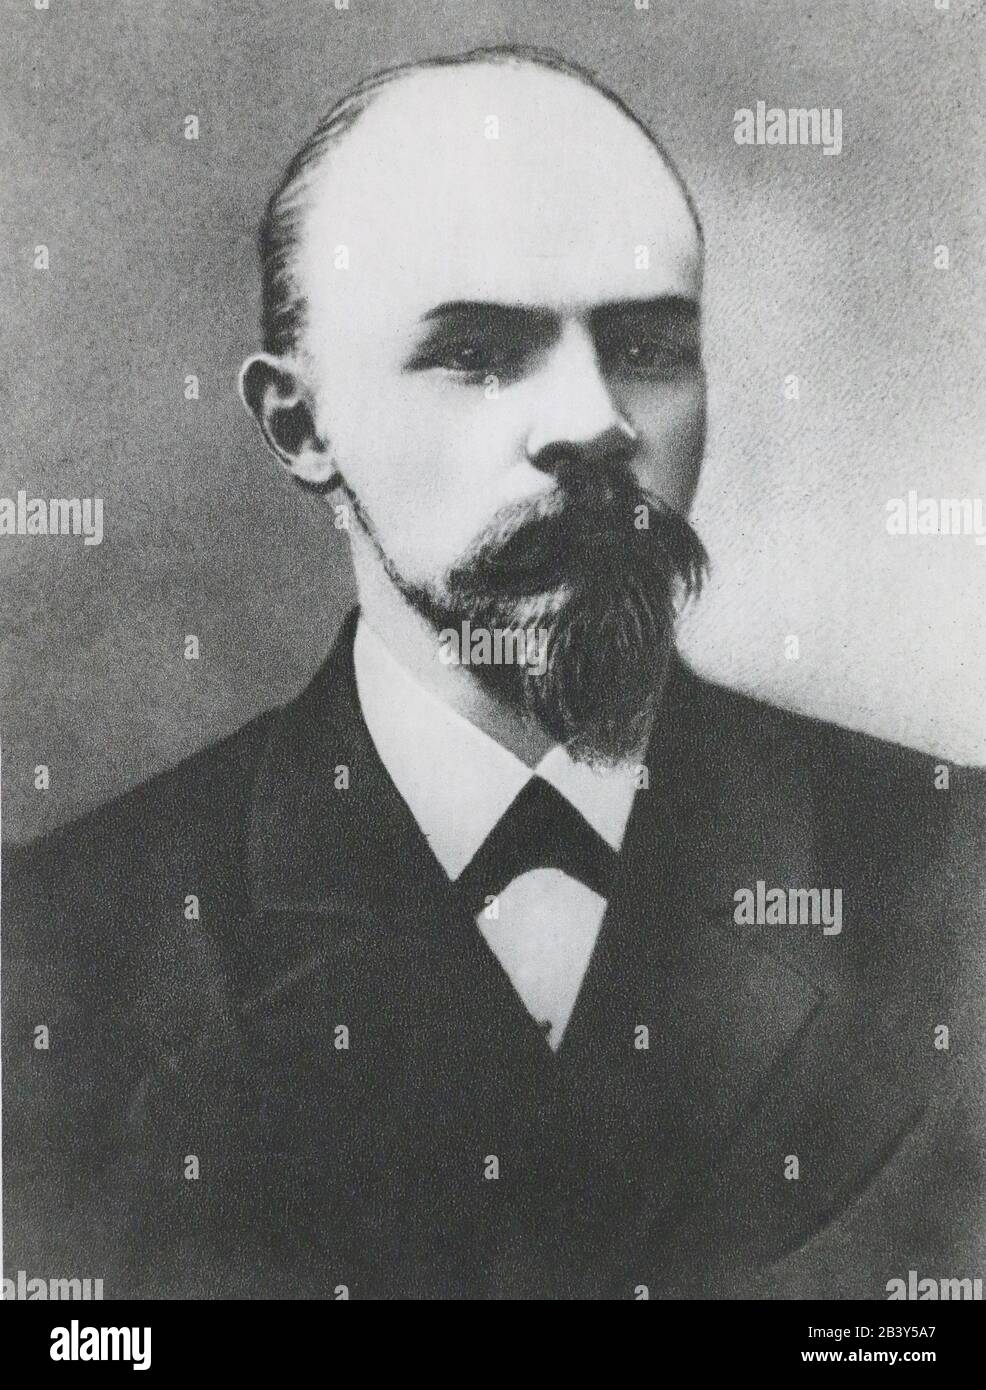 Fotoporträt von V.I. Lenin im Jahr 1897. Stockfoto